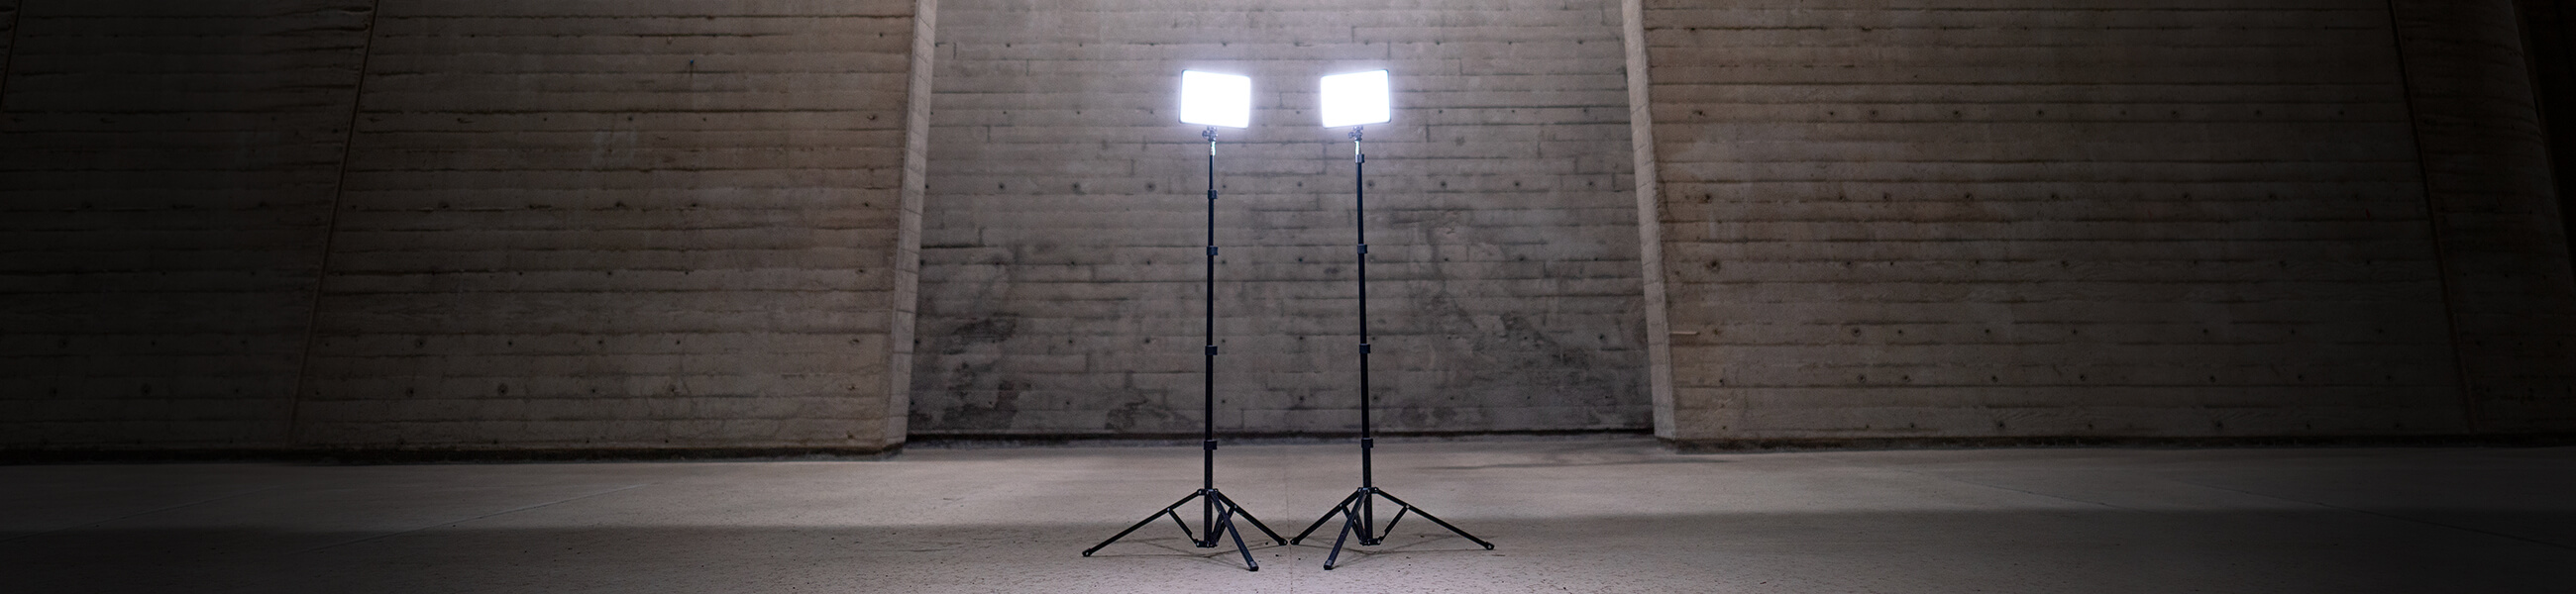 professional led studio lighting kit portable